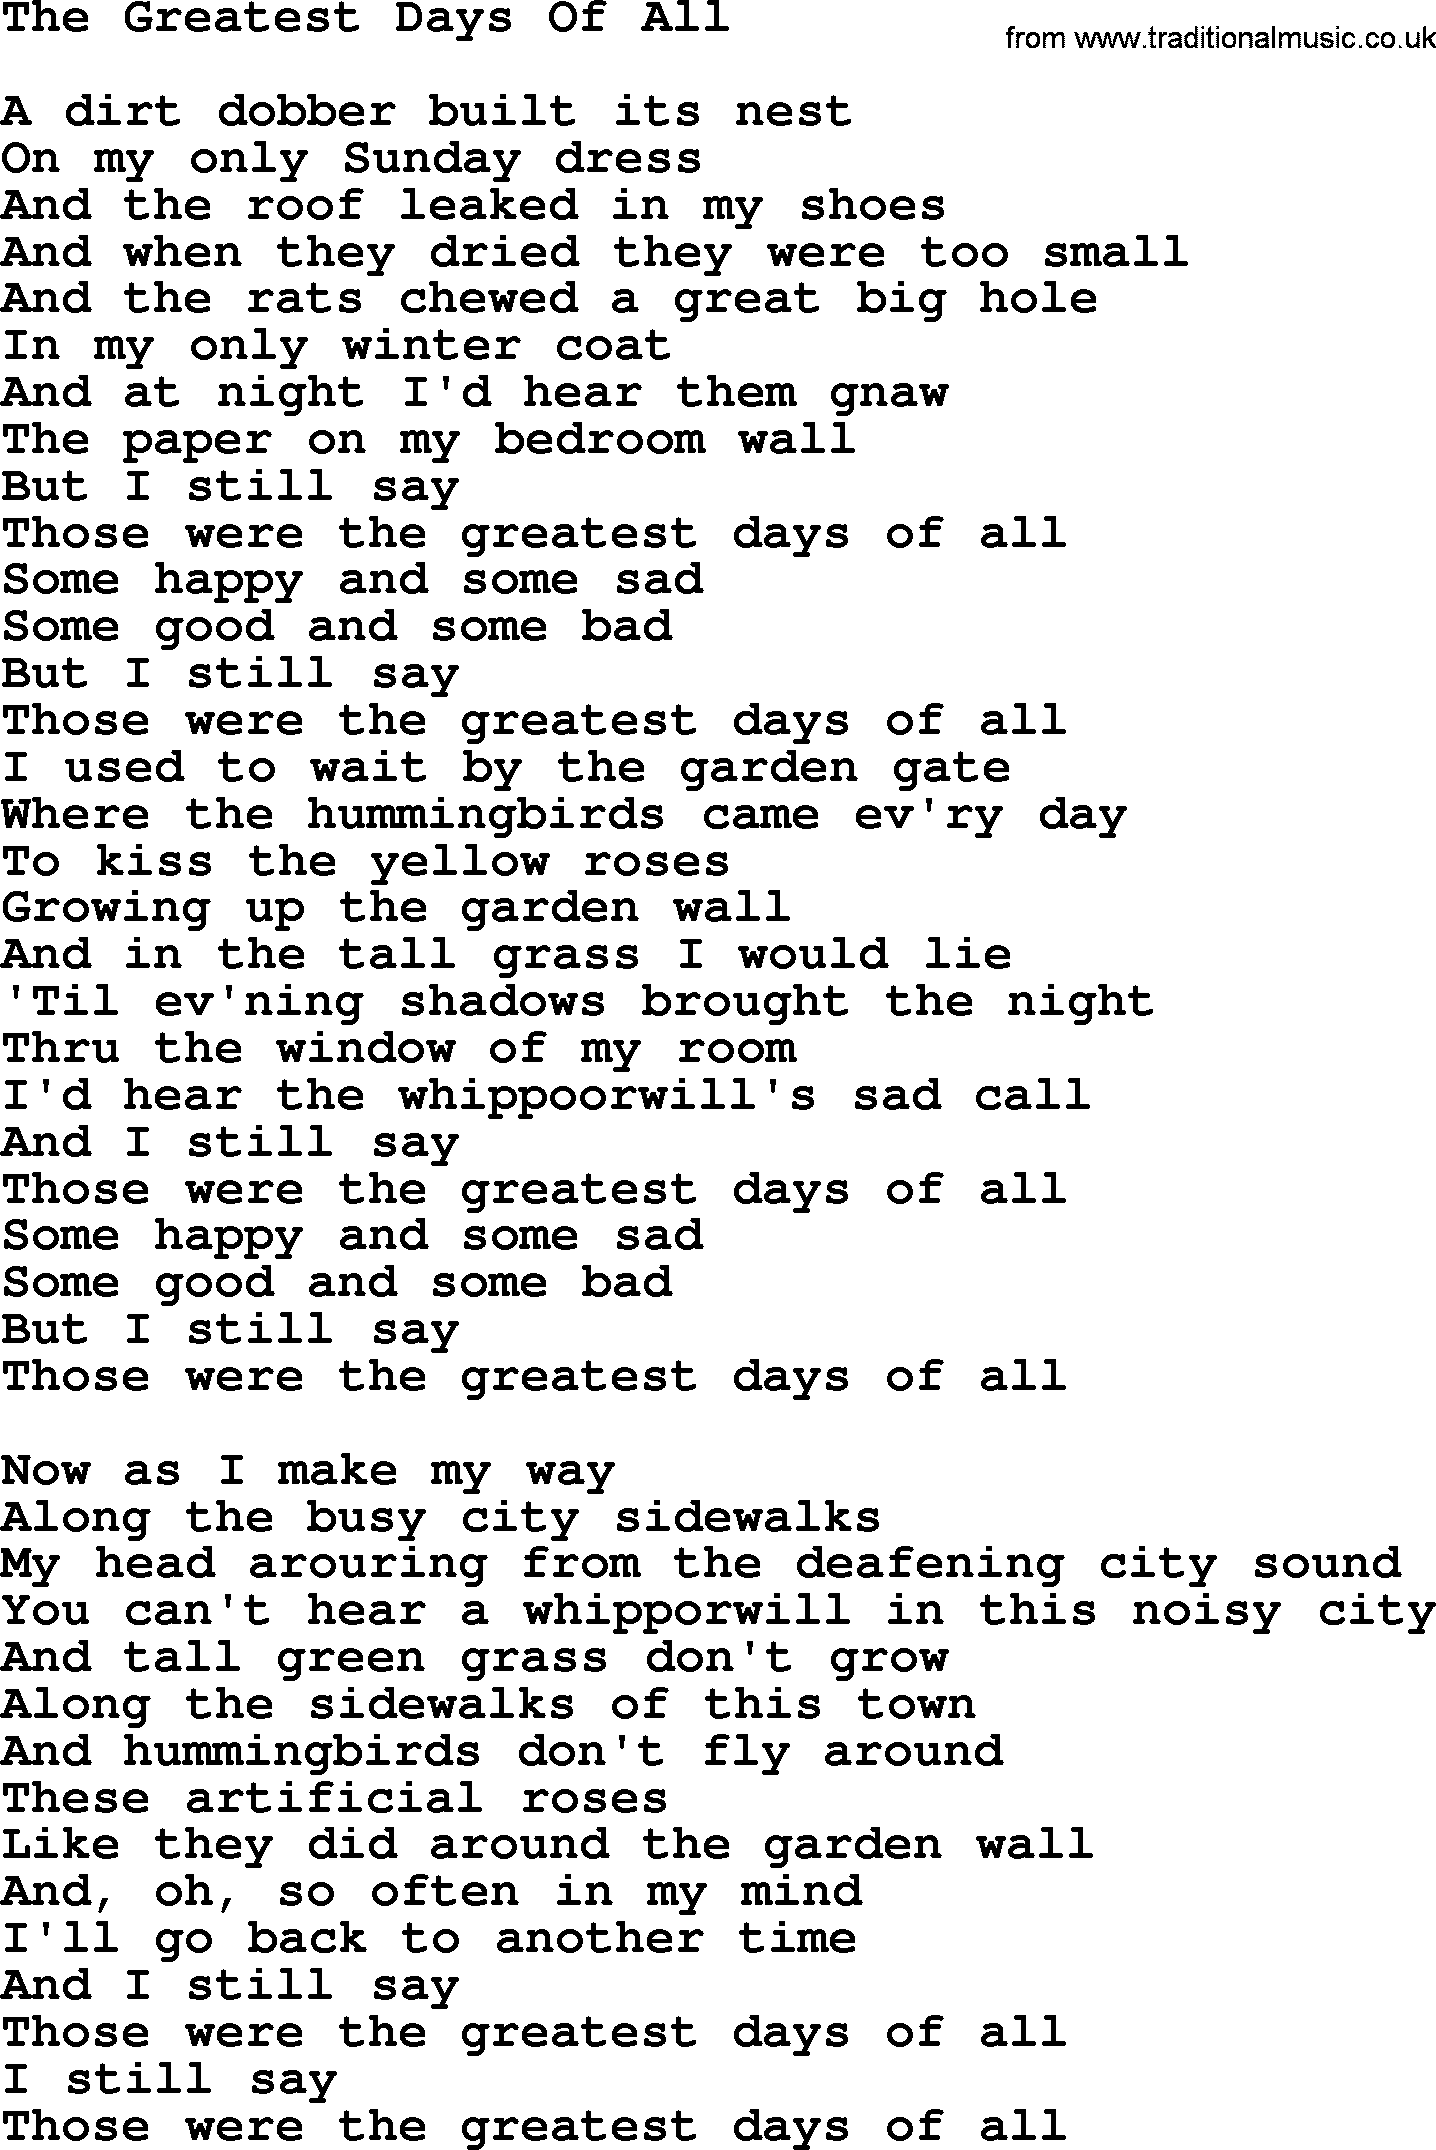 Dolly Parton song The Greatest Days Of All.txt lyrics